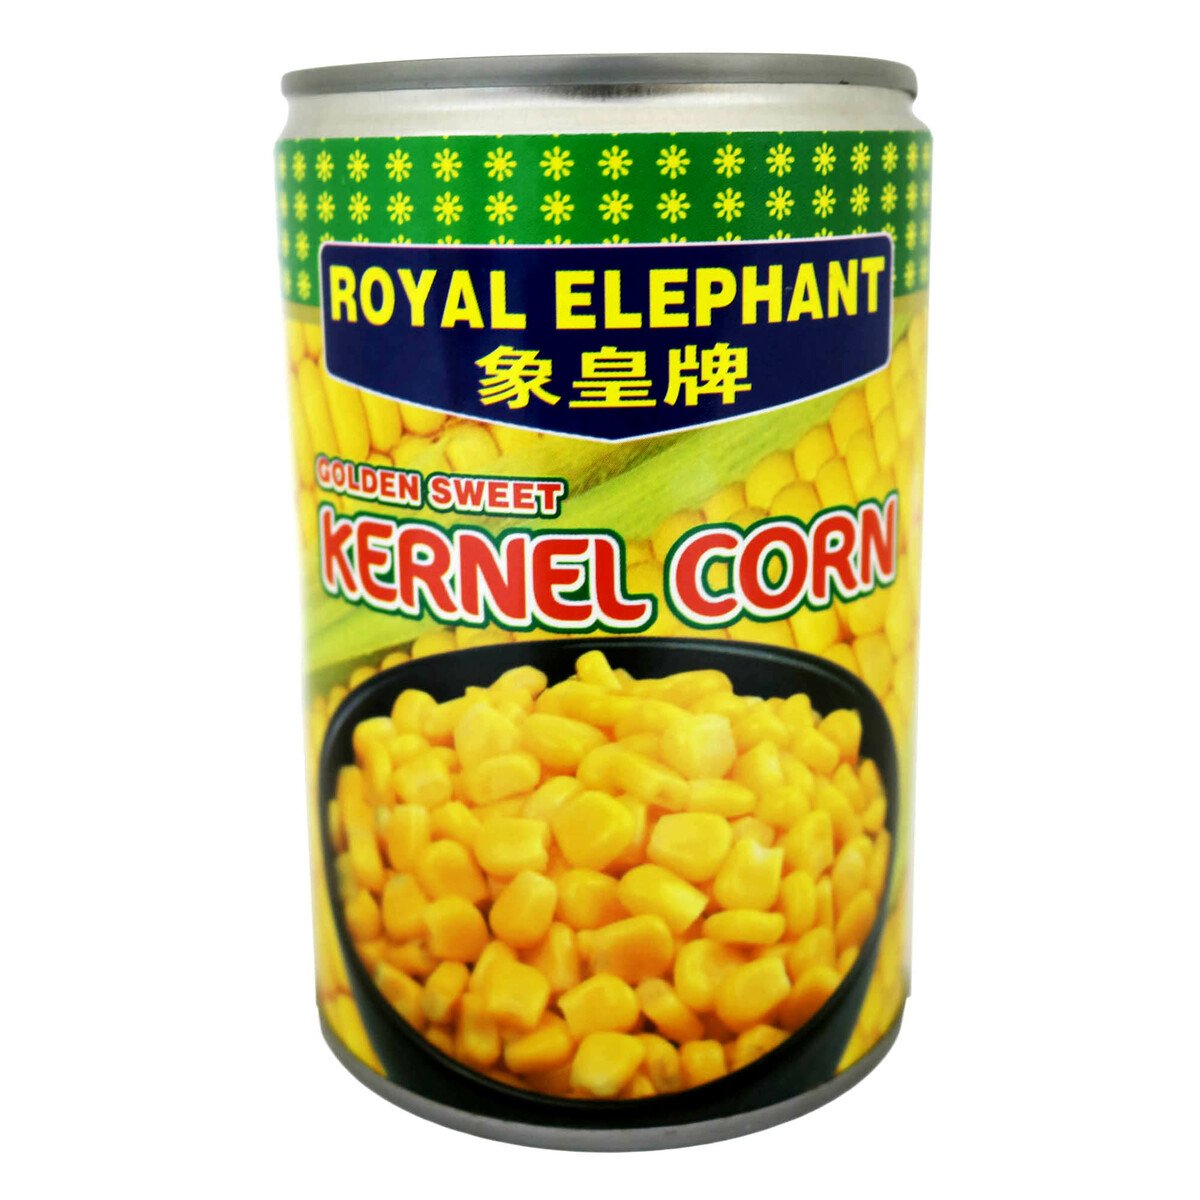 Royal Elephant Kernel Corn 425g